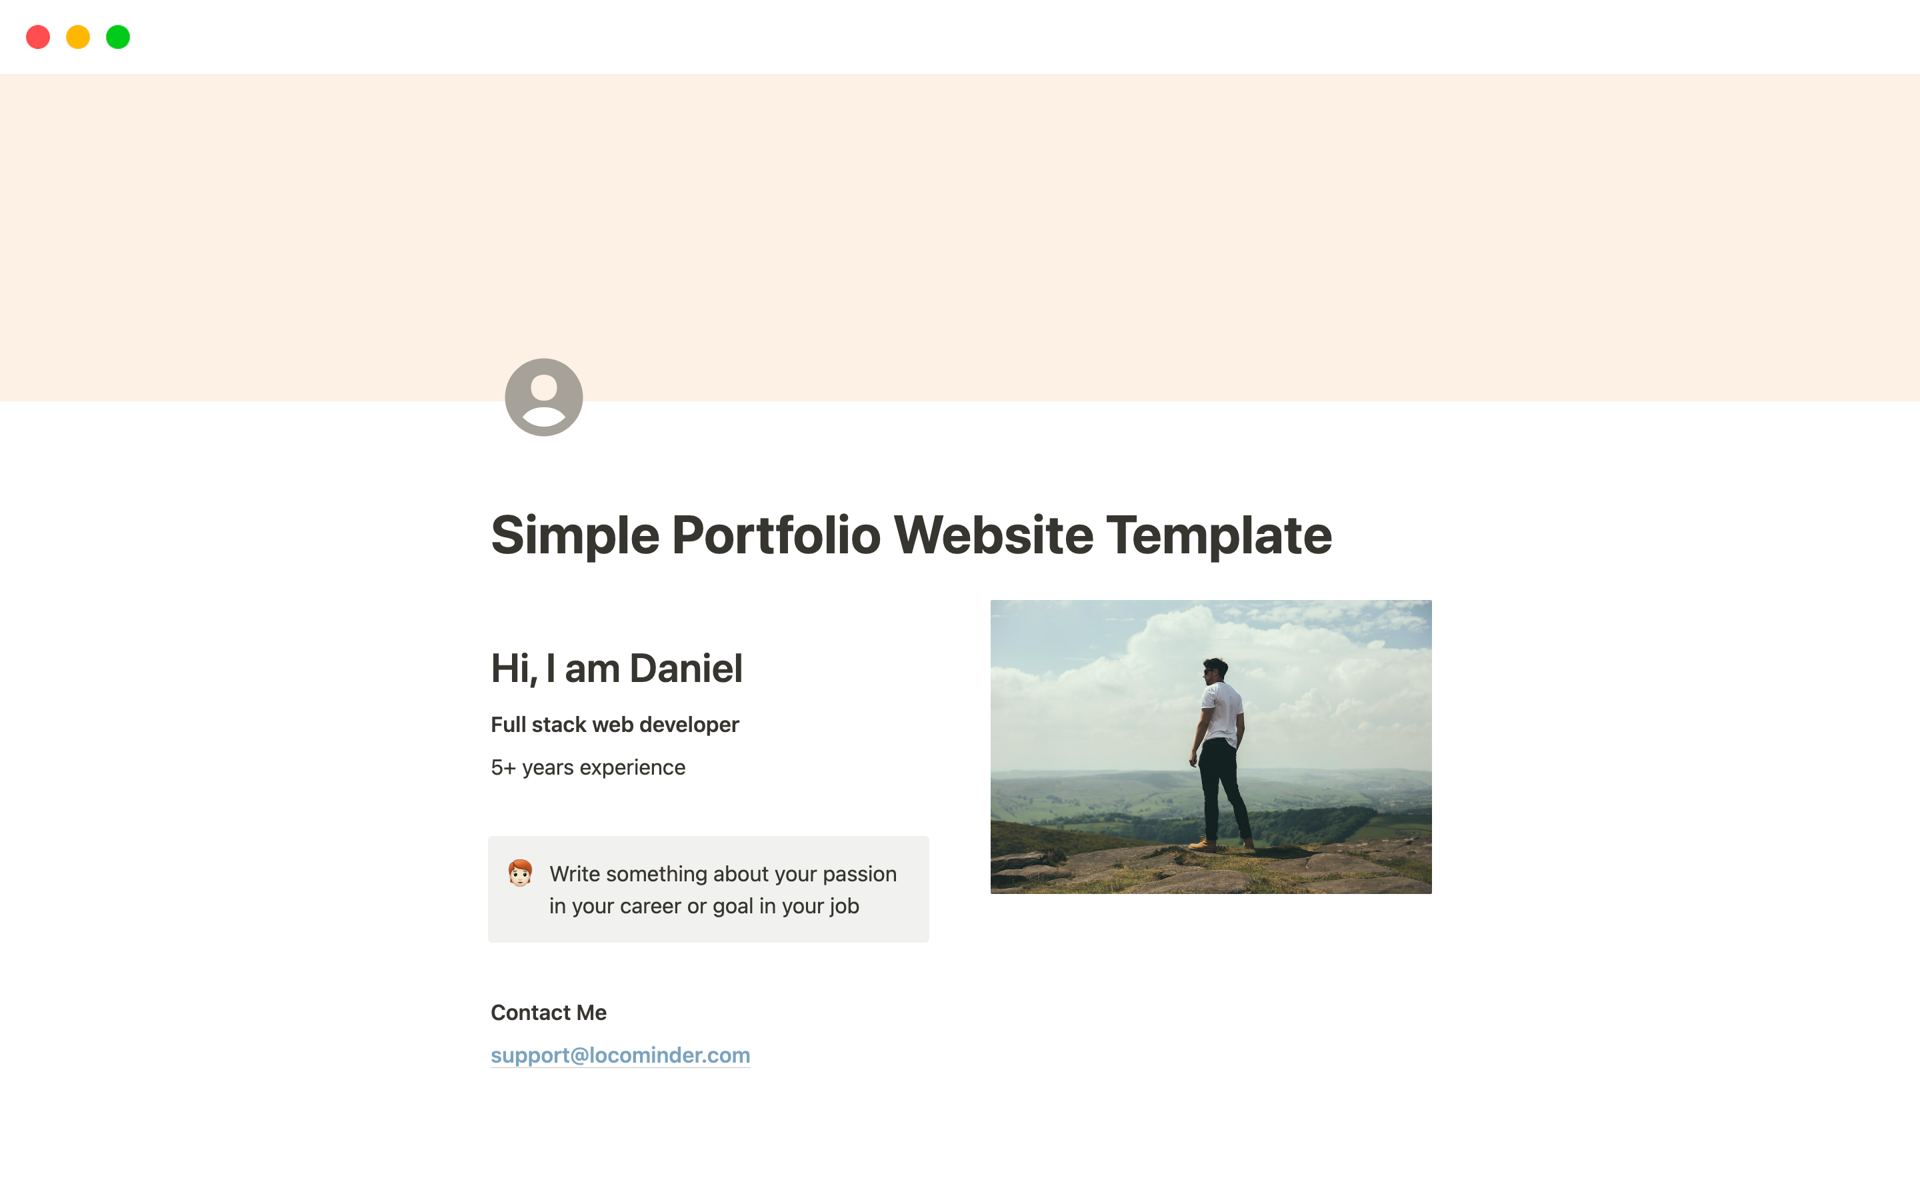 Presenting the Notion Simple Portfolio Website Template